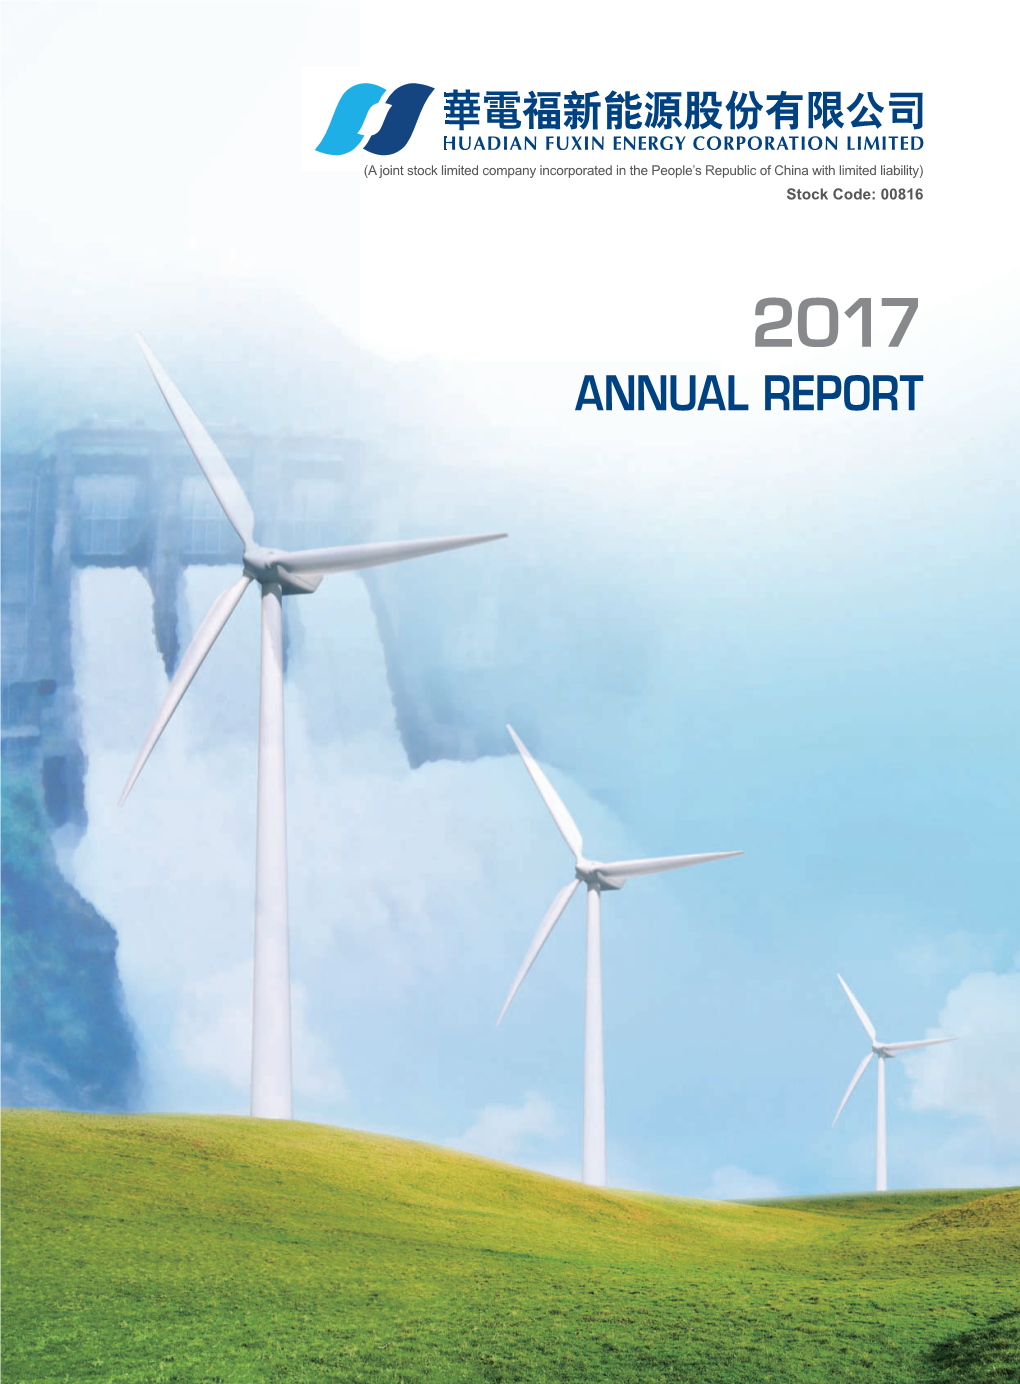 Annual Report 年度報告 2017 Annual Report